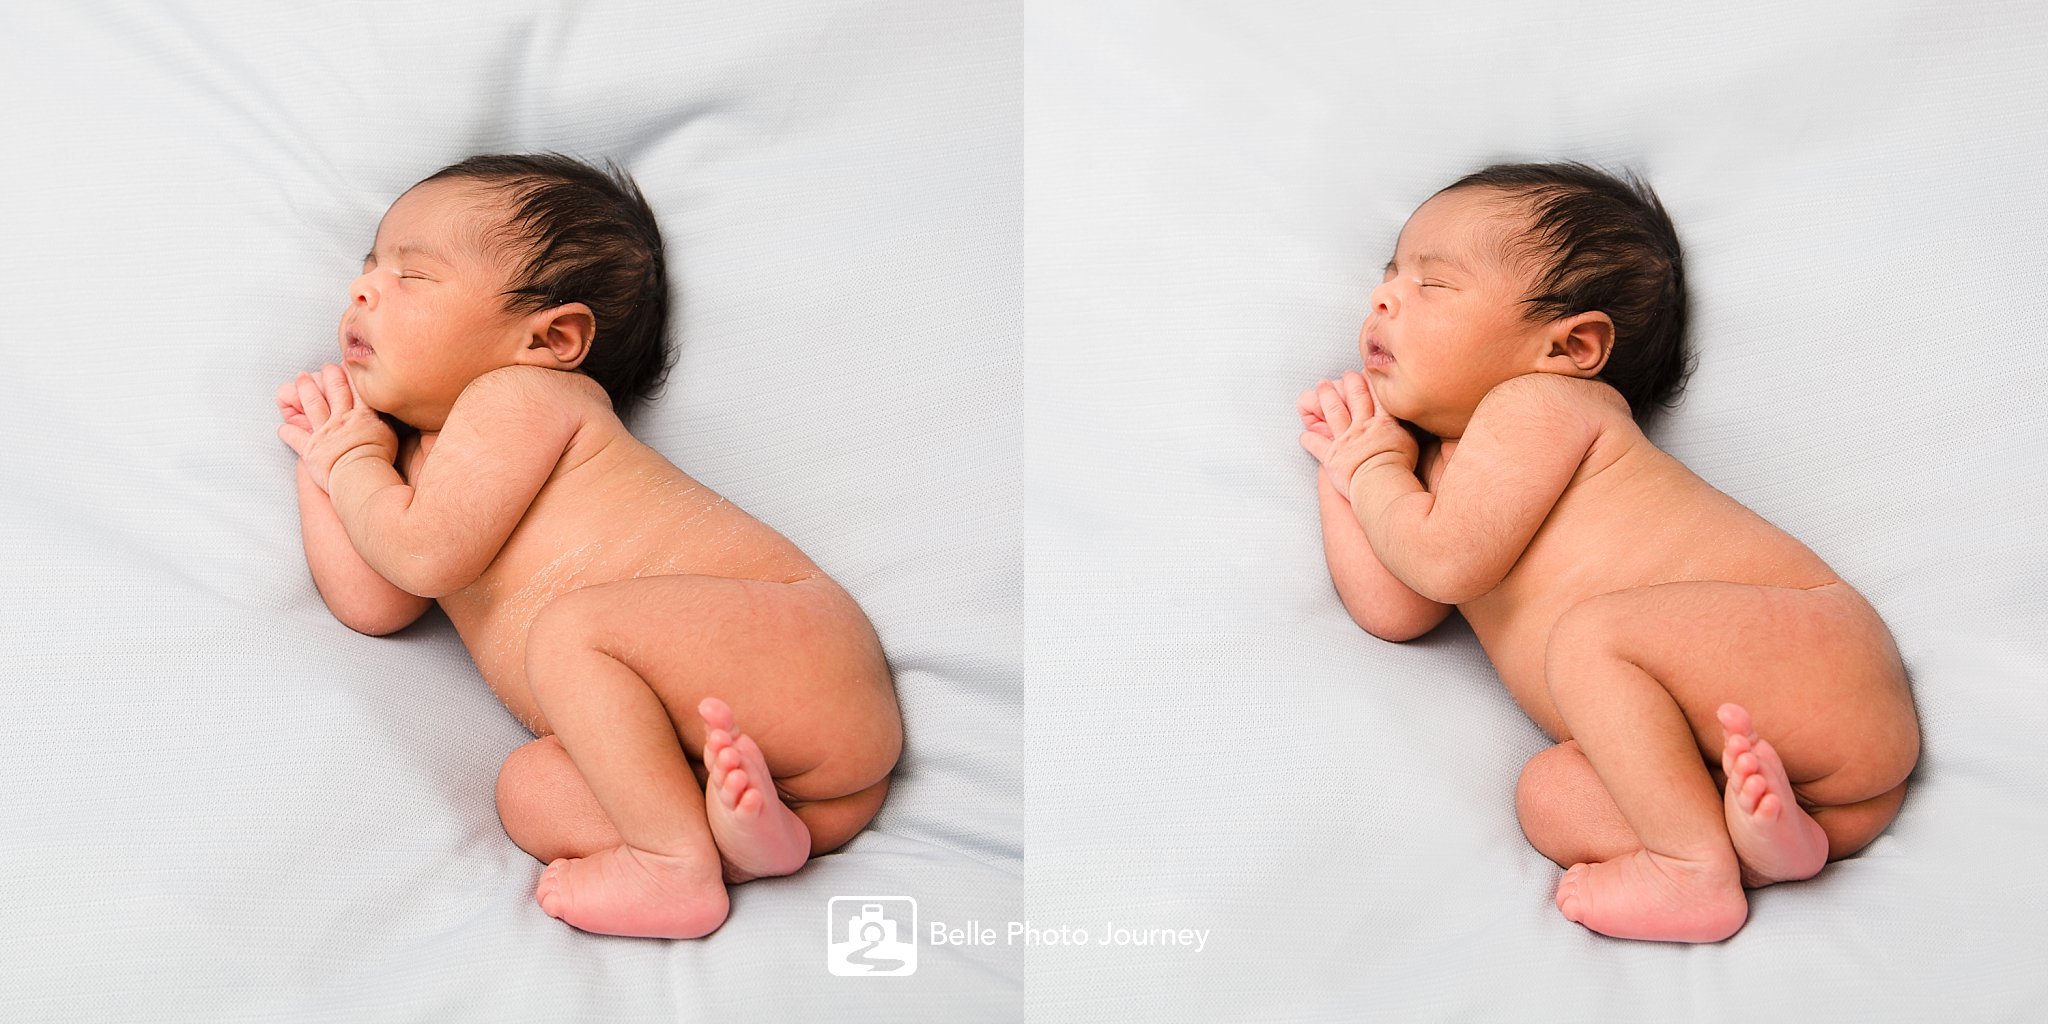 North London newborn baby photography editing | BellePhotoJourney